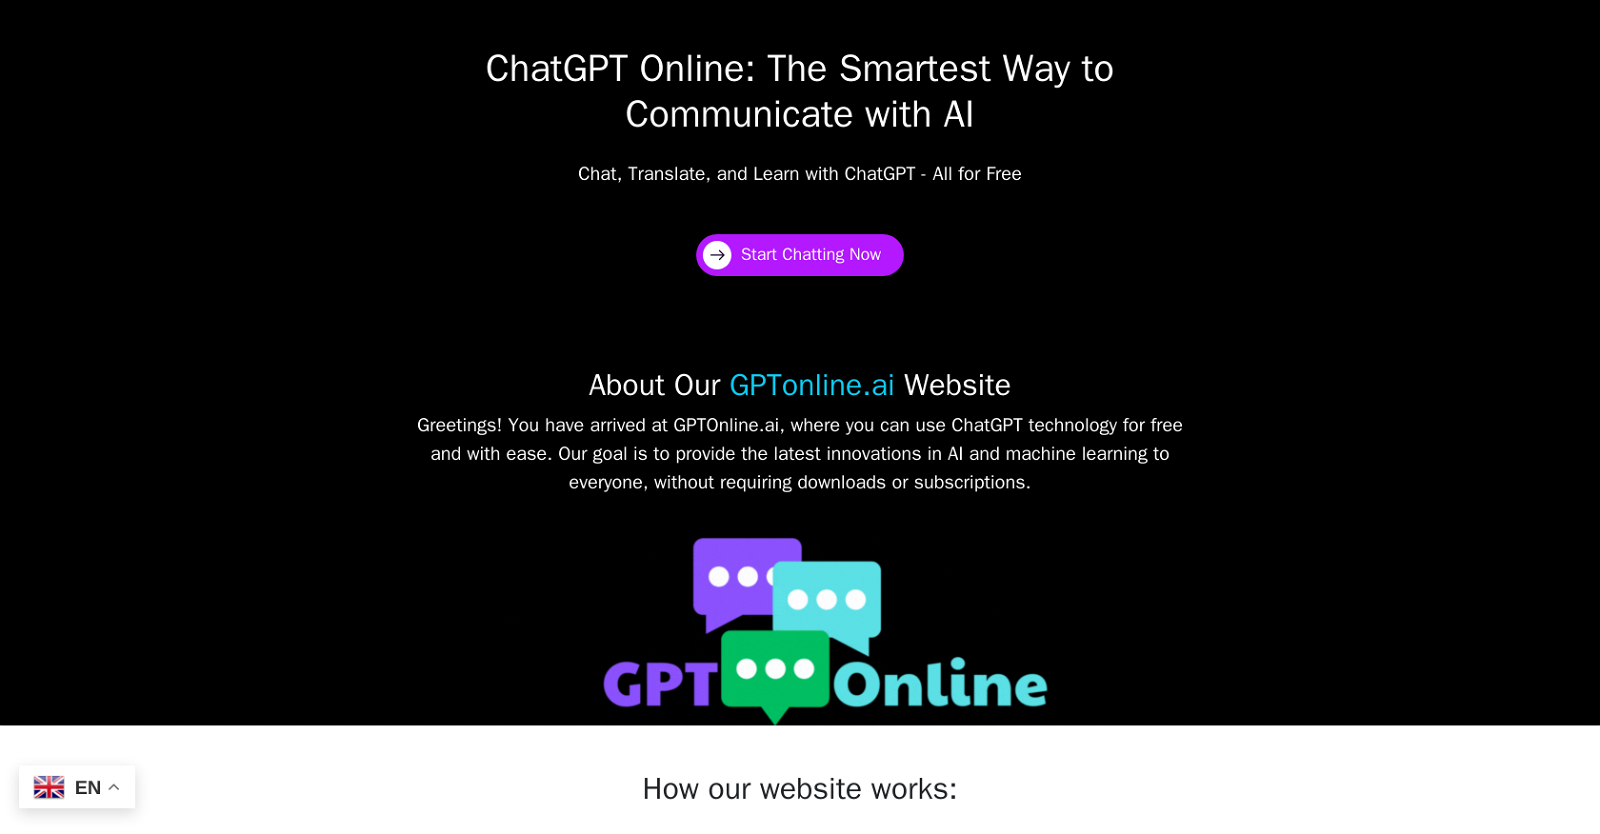 ChatGPT Online website